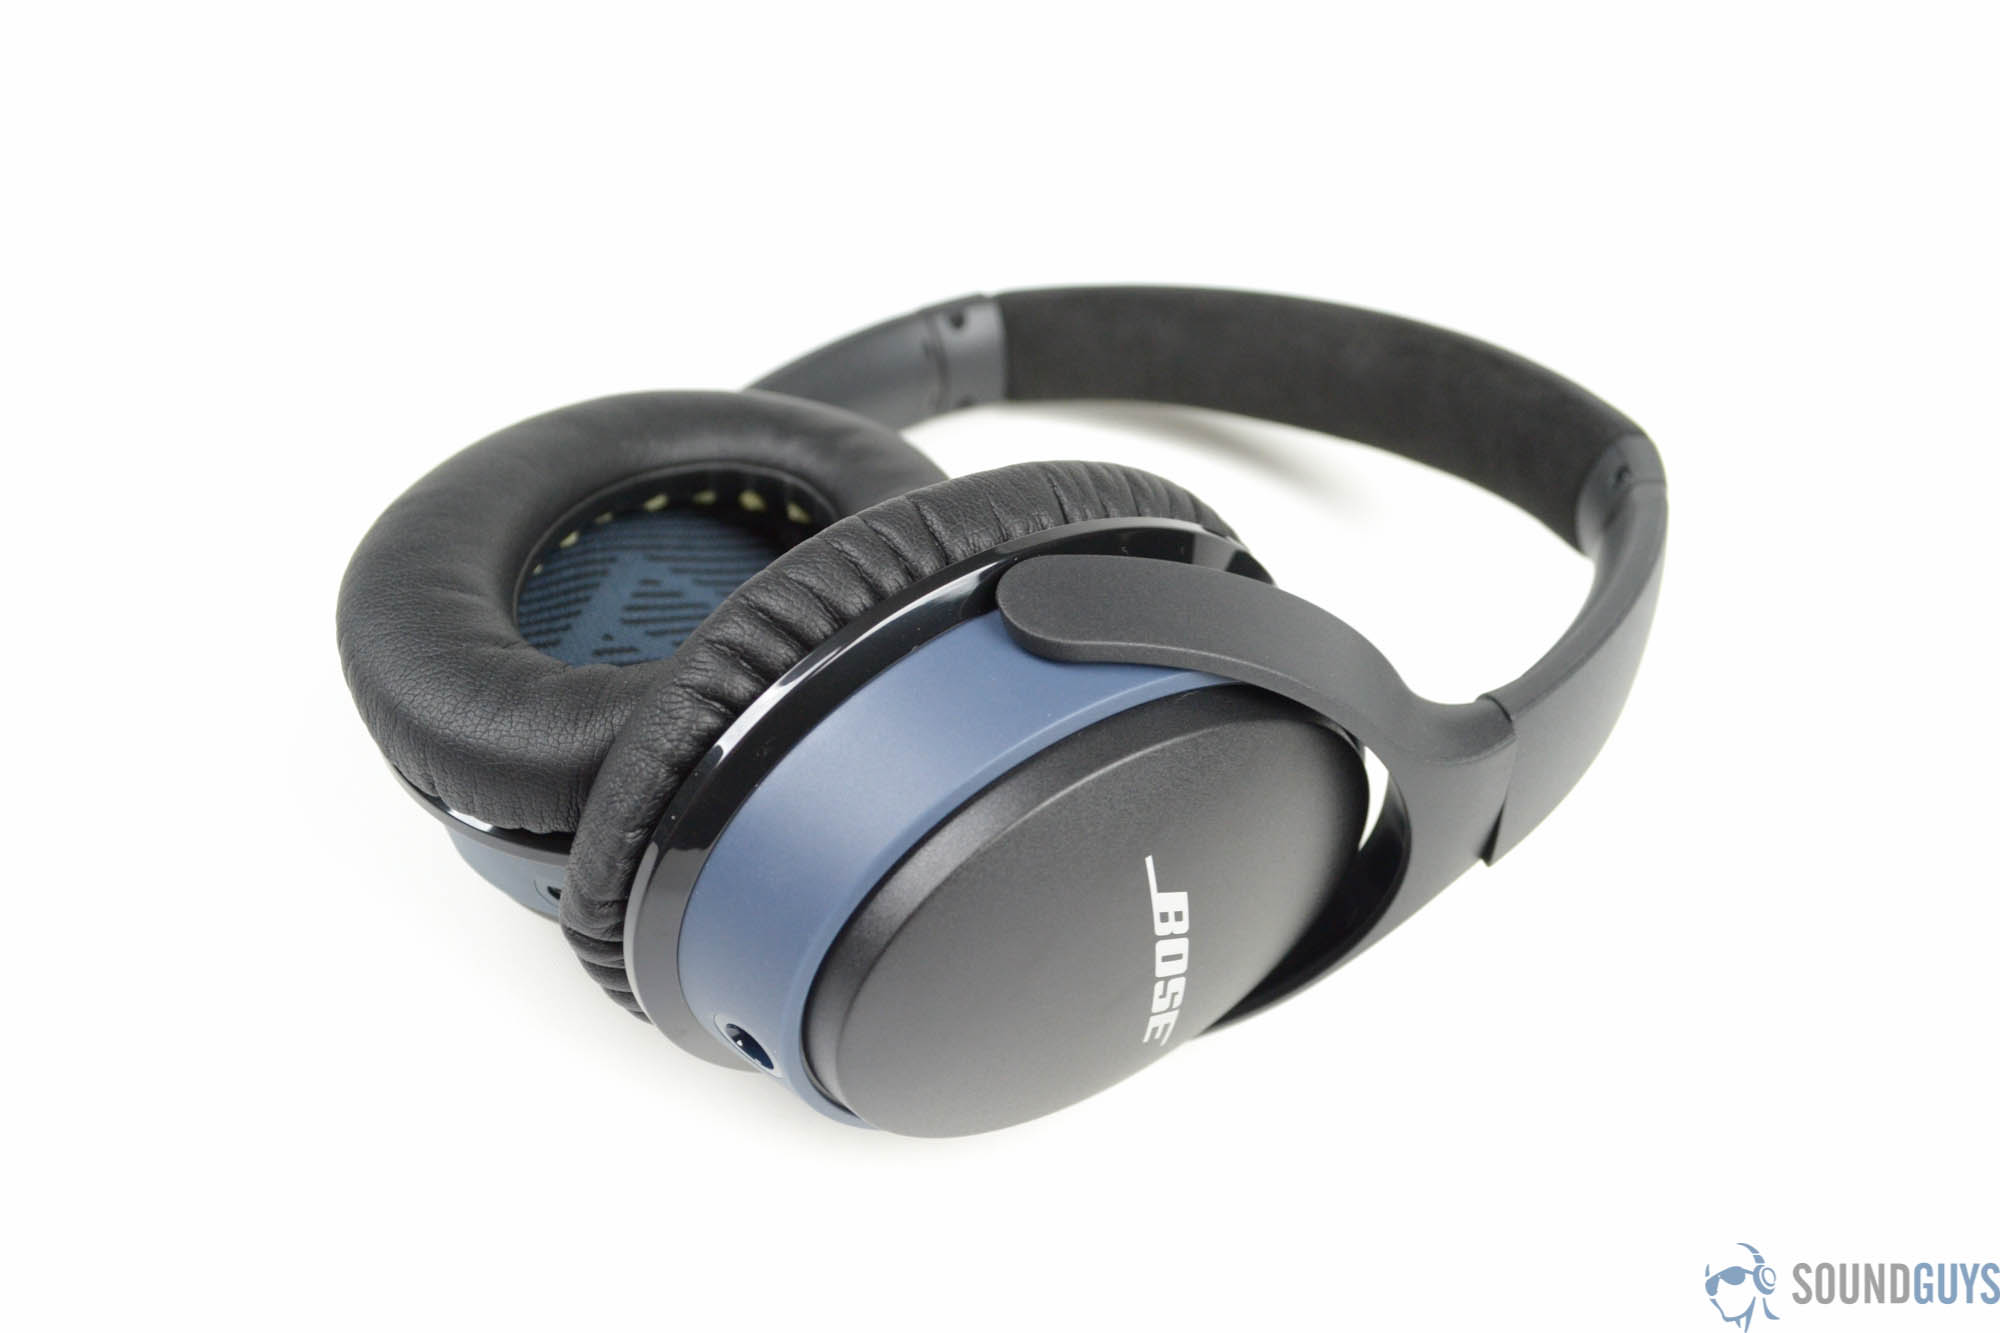 Bose SoundLink Around-Ear Wireless Headphone II Review